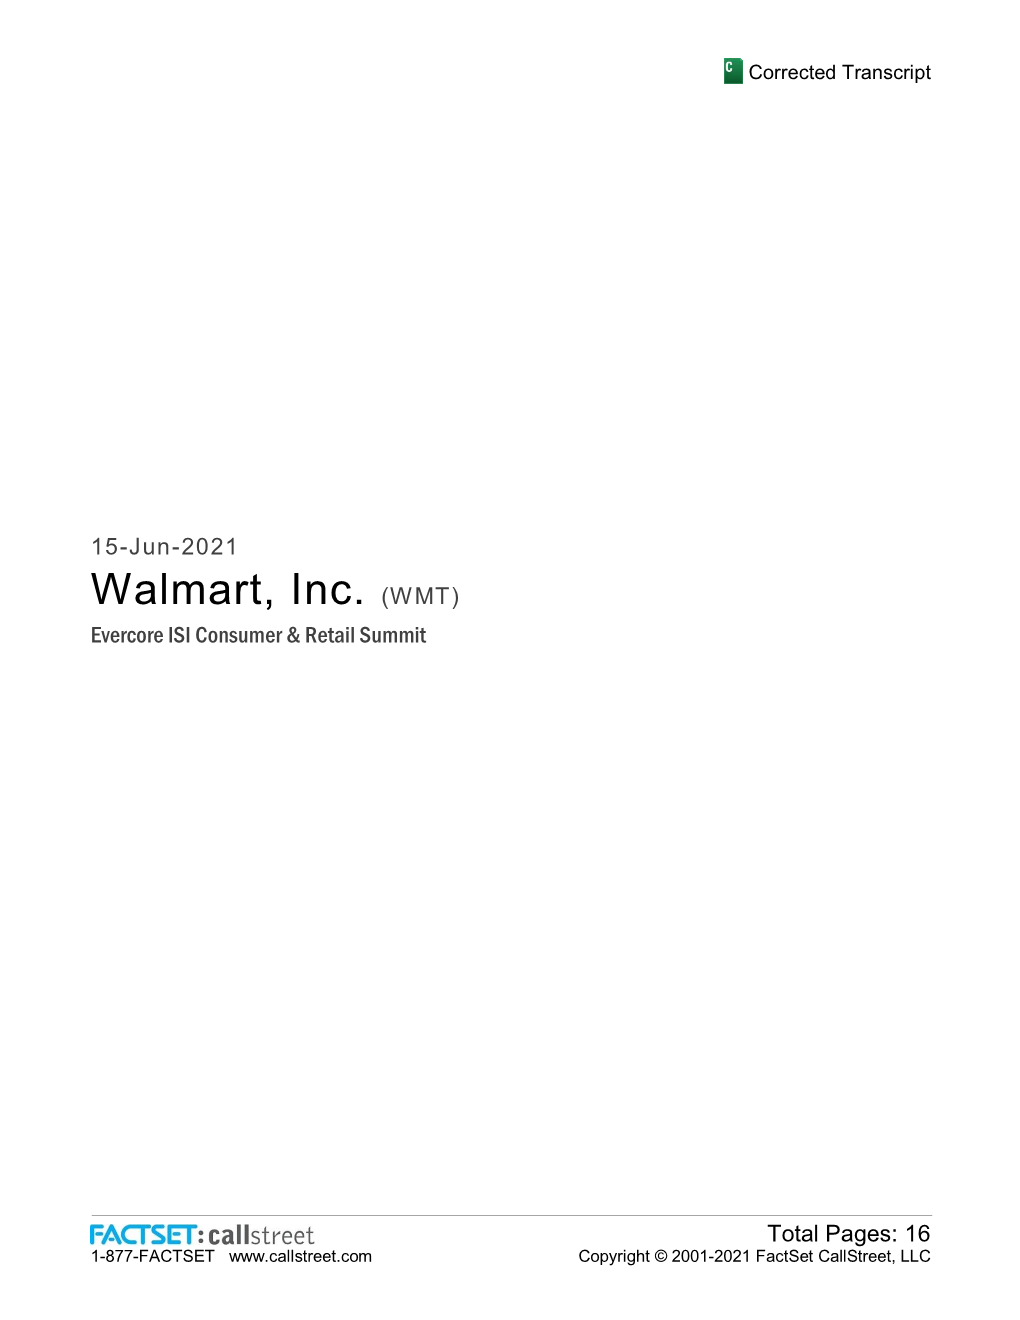 Walmart, Inc. (WMT) Evercore ISI Consumer & Retail Summit